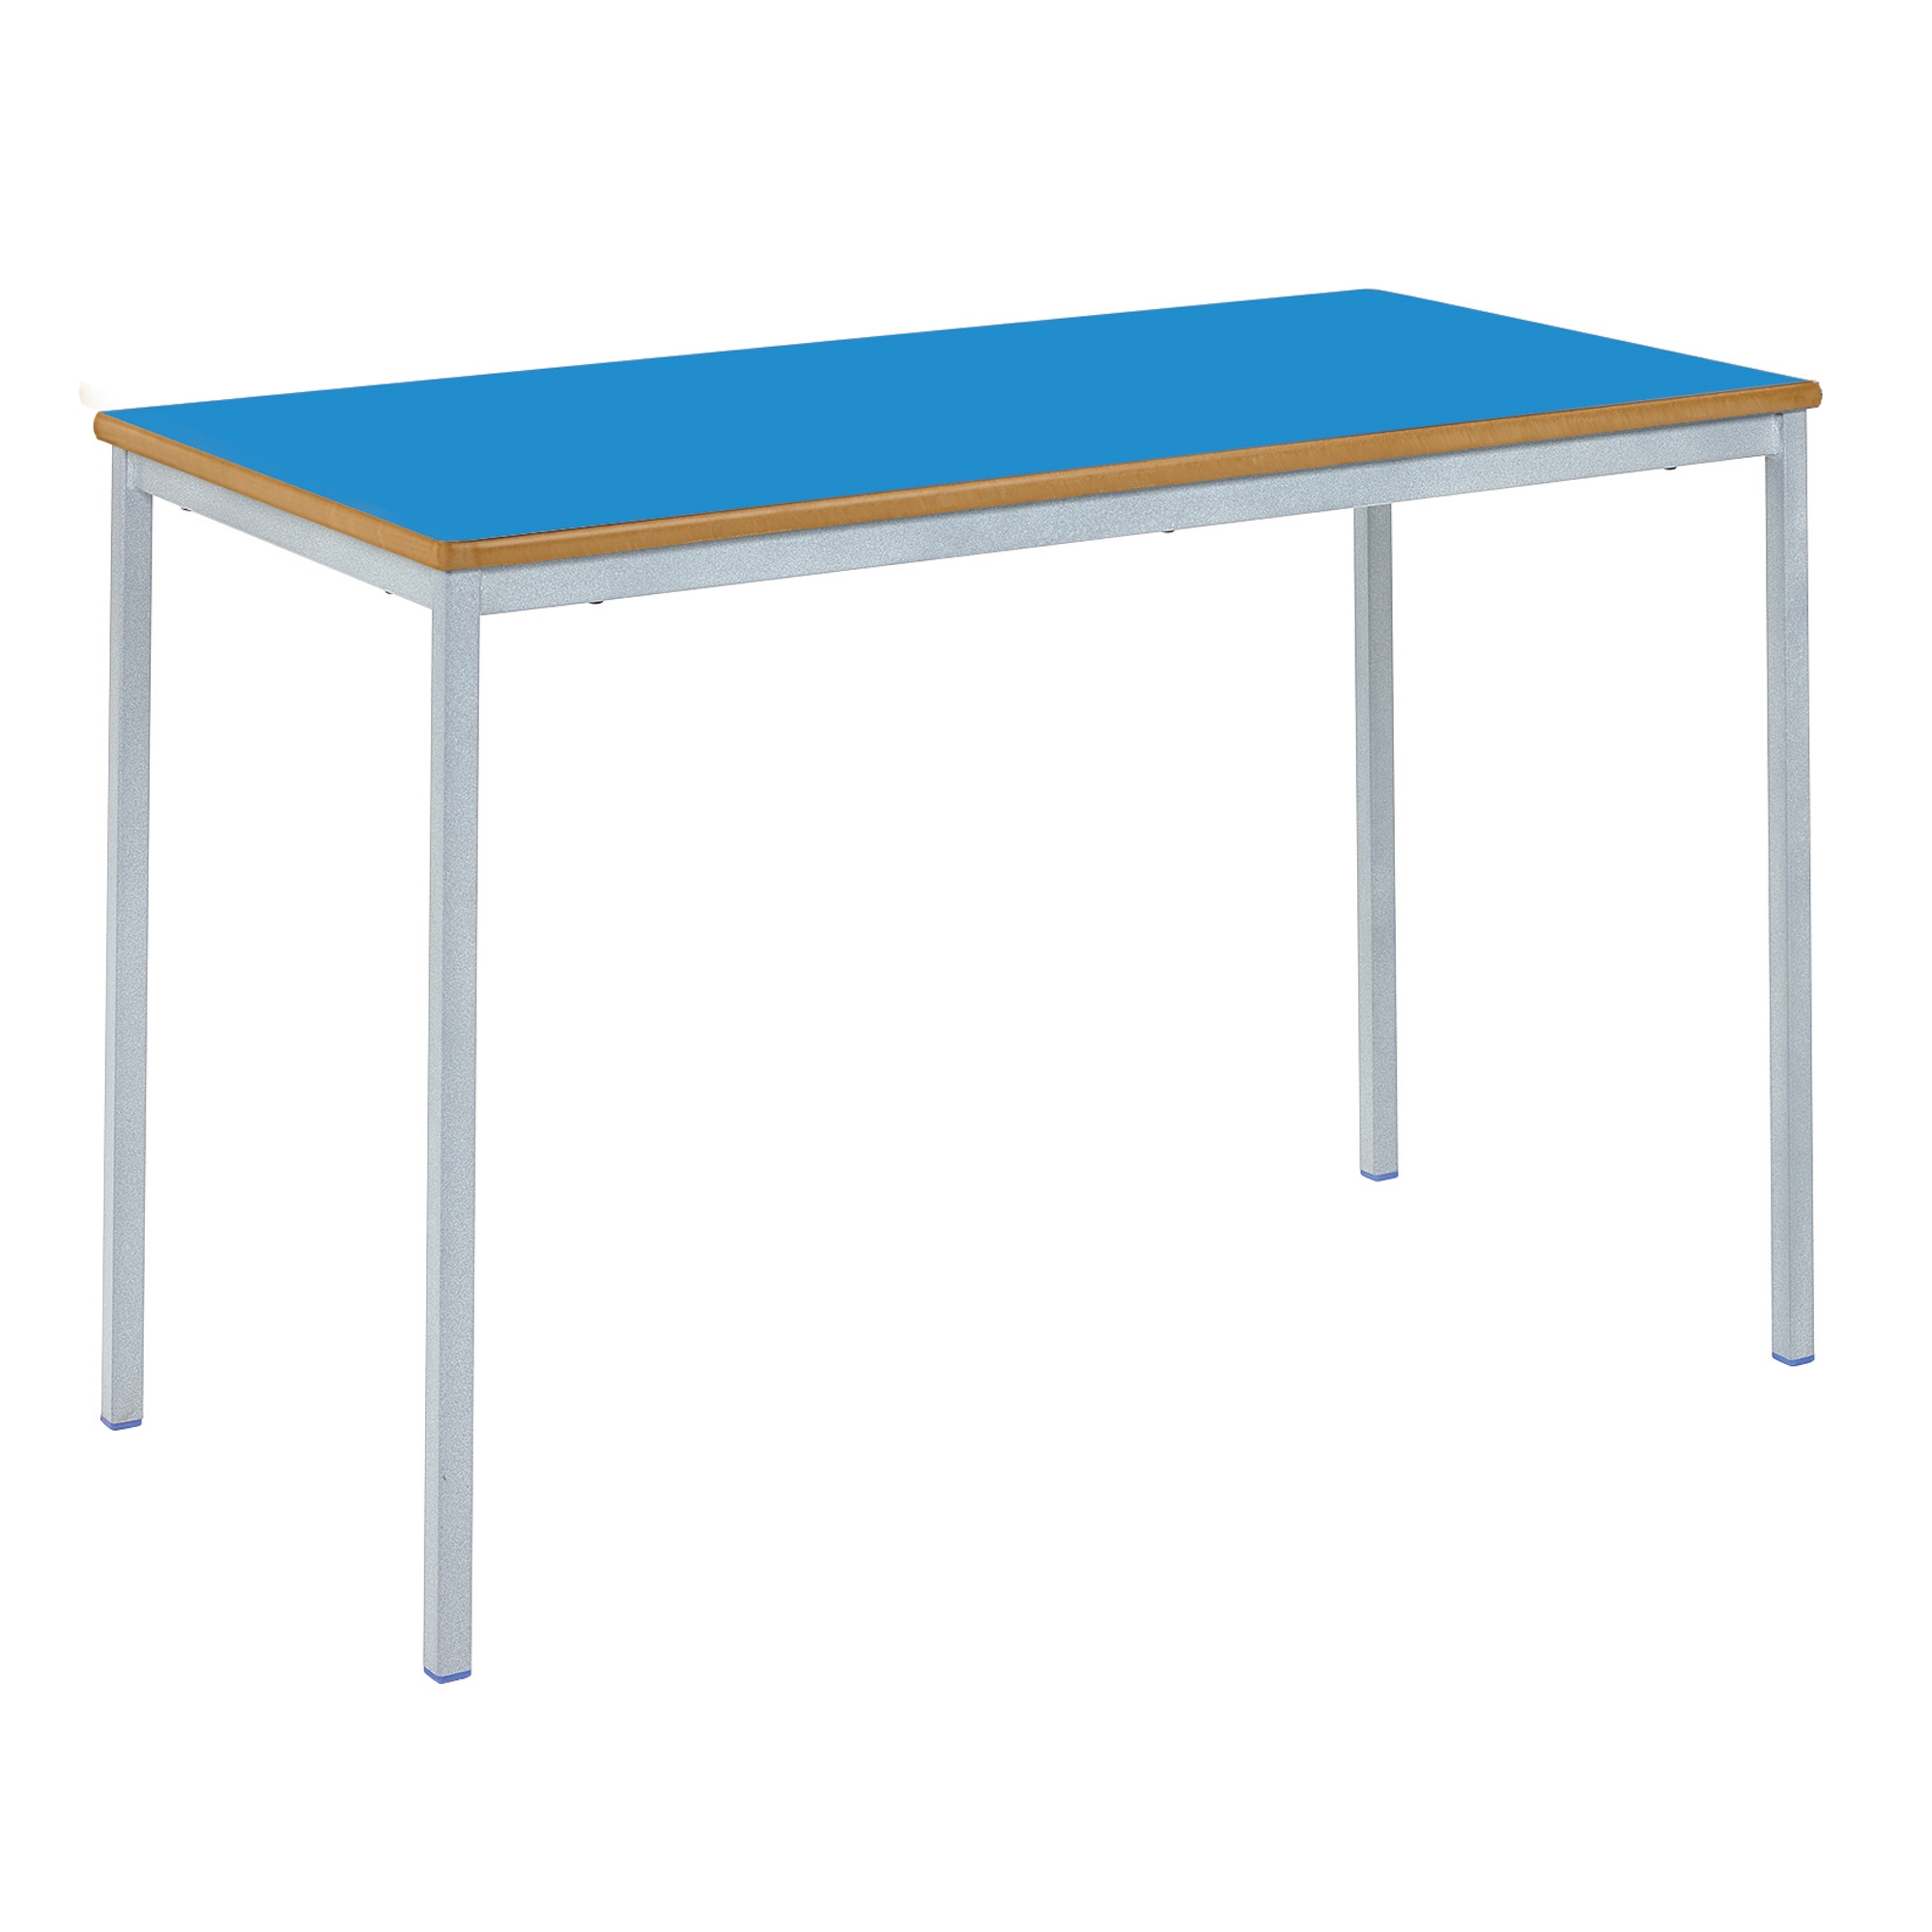 Classmates Rectangular Fully Welded Classroom Table - 1100 x 550 x 530mm - Blue